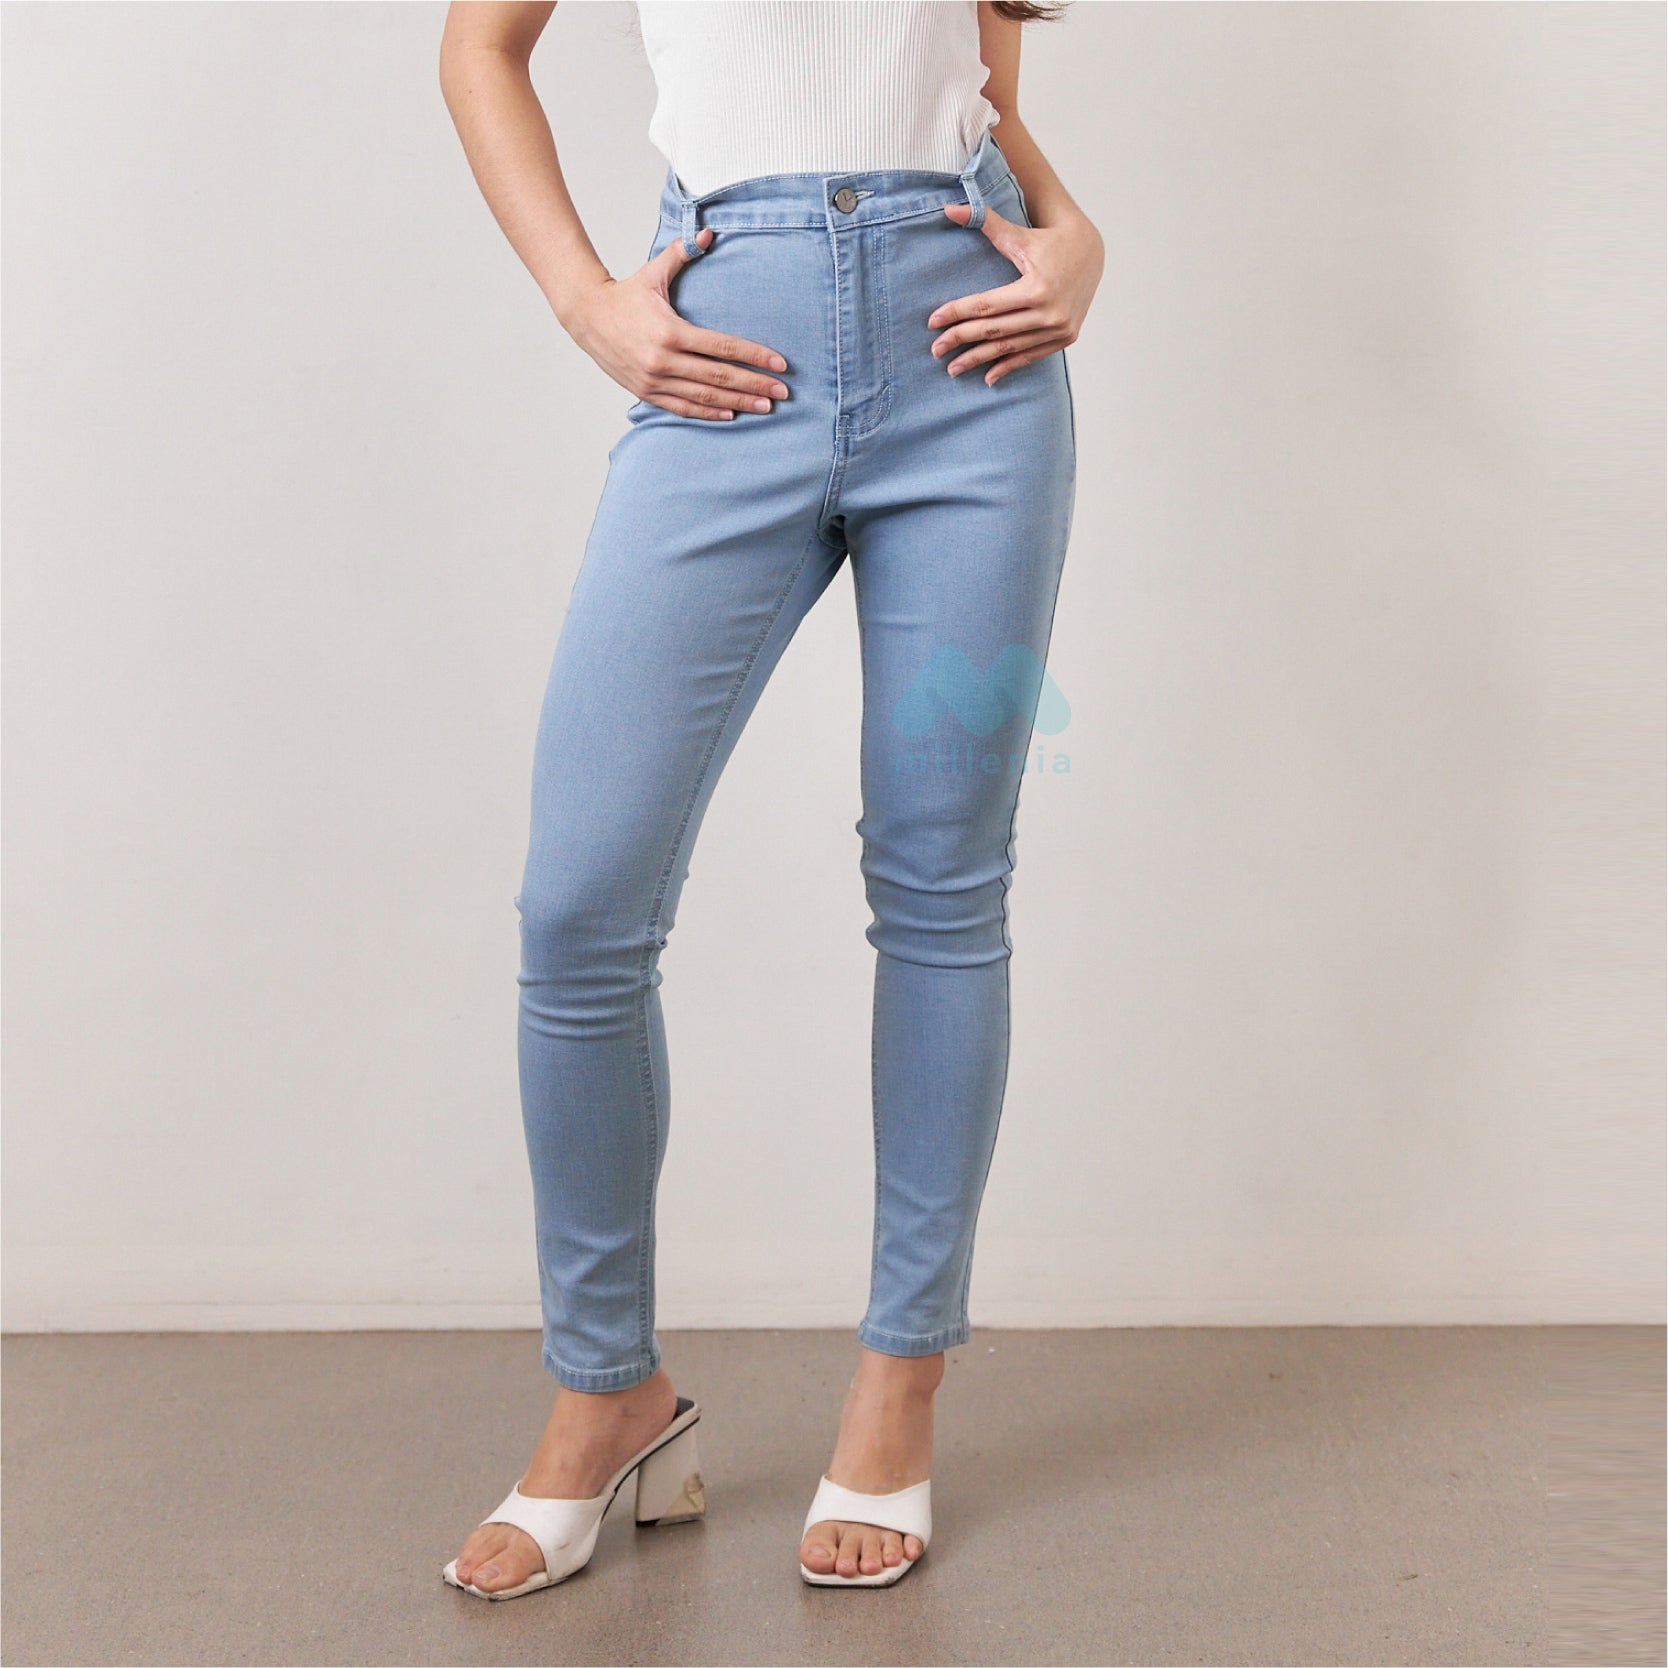 Sanny Jeans Wanita Skinny High Rise [MYMJ 01]